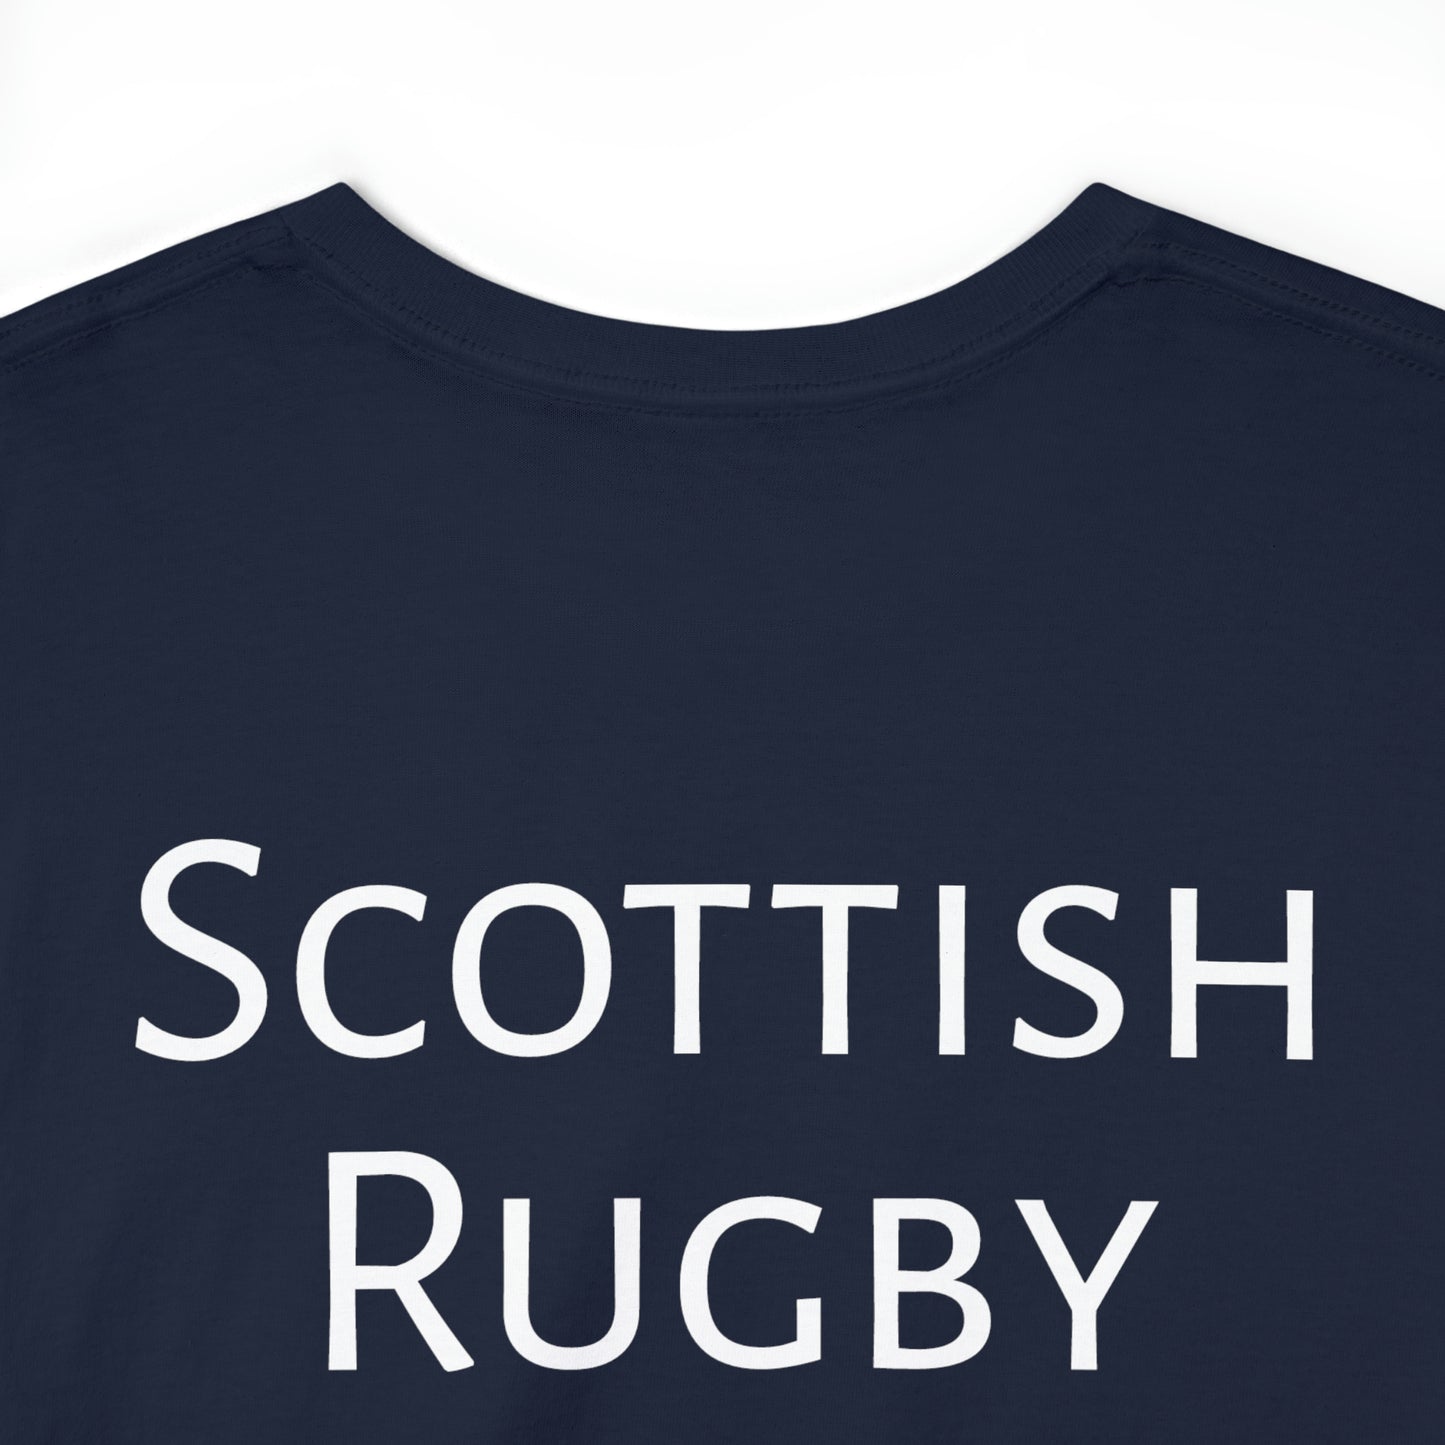 Celebrating Scotland - dark shirts